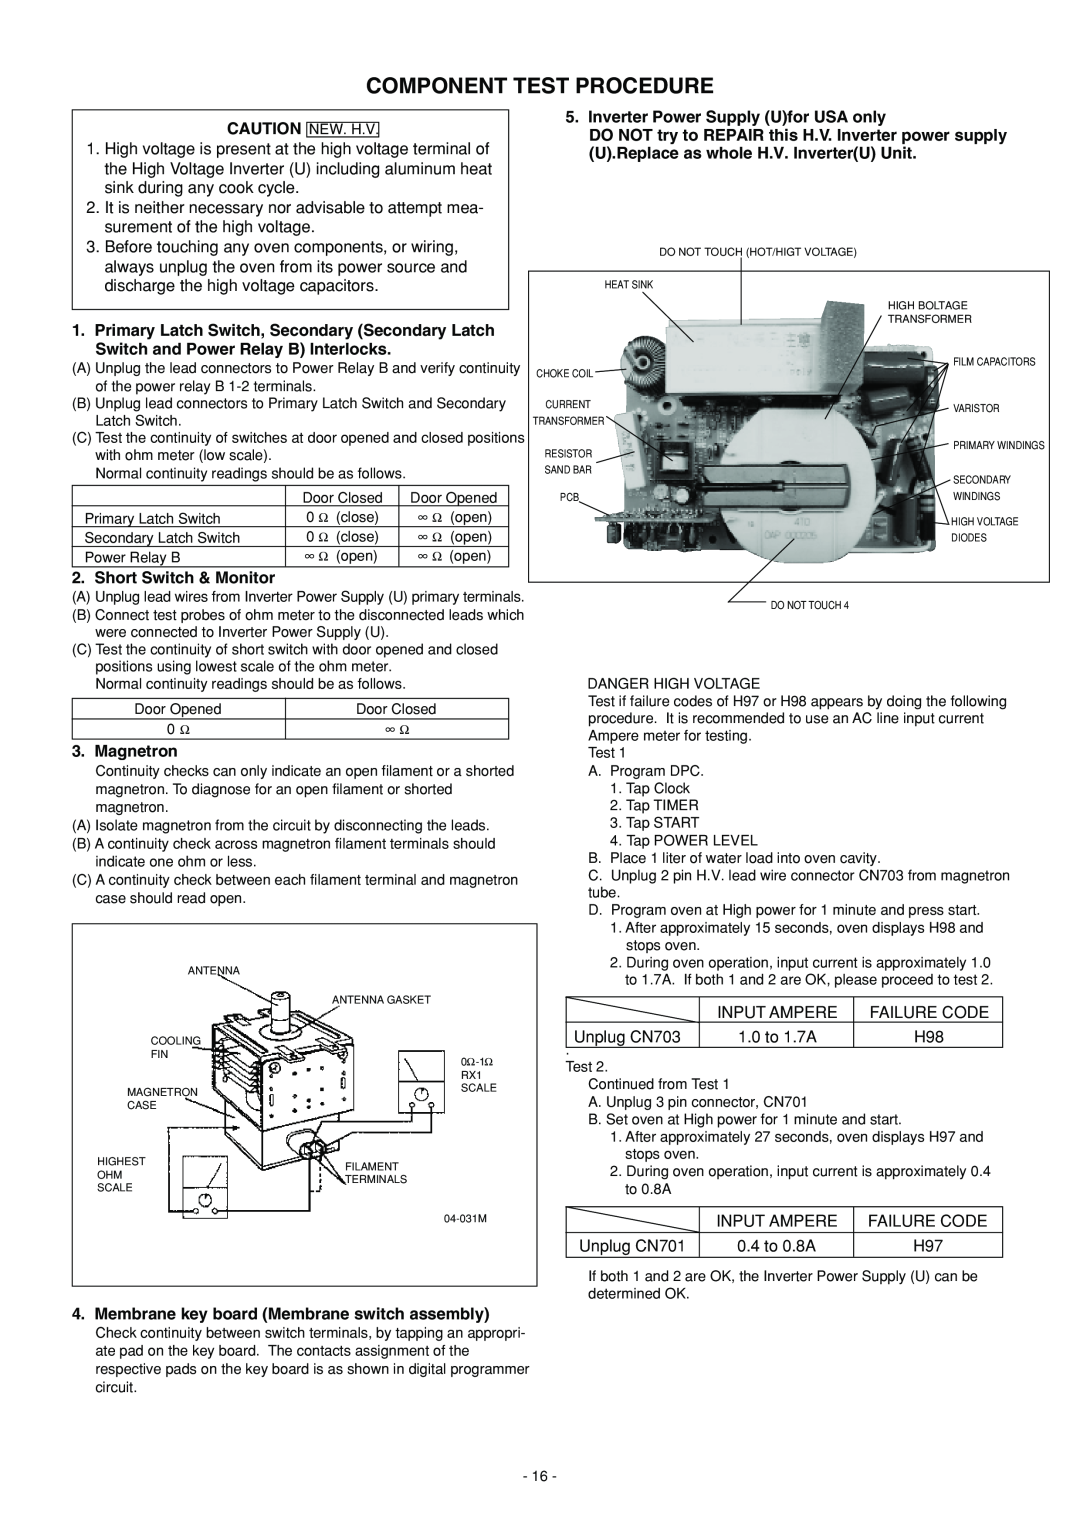 Panasonic NN-L530BF Component Test Procedure, Inverter Power Supply Ufor USA only, U.Replace as whole H.V. InverterU Unit 